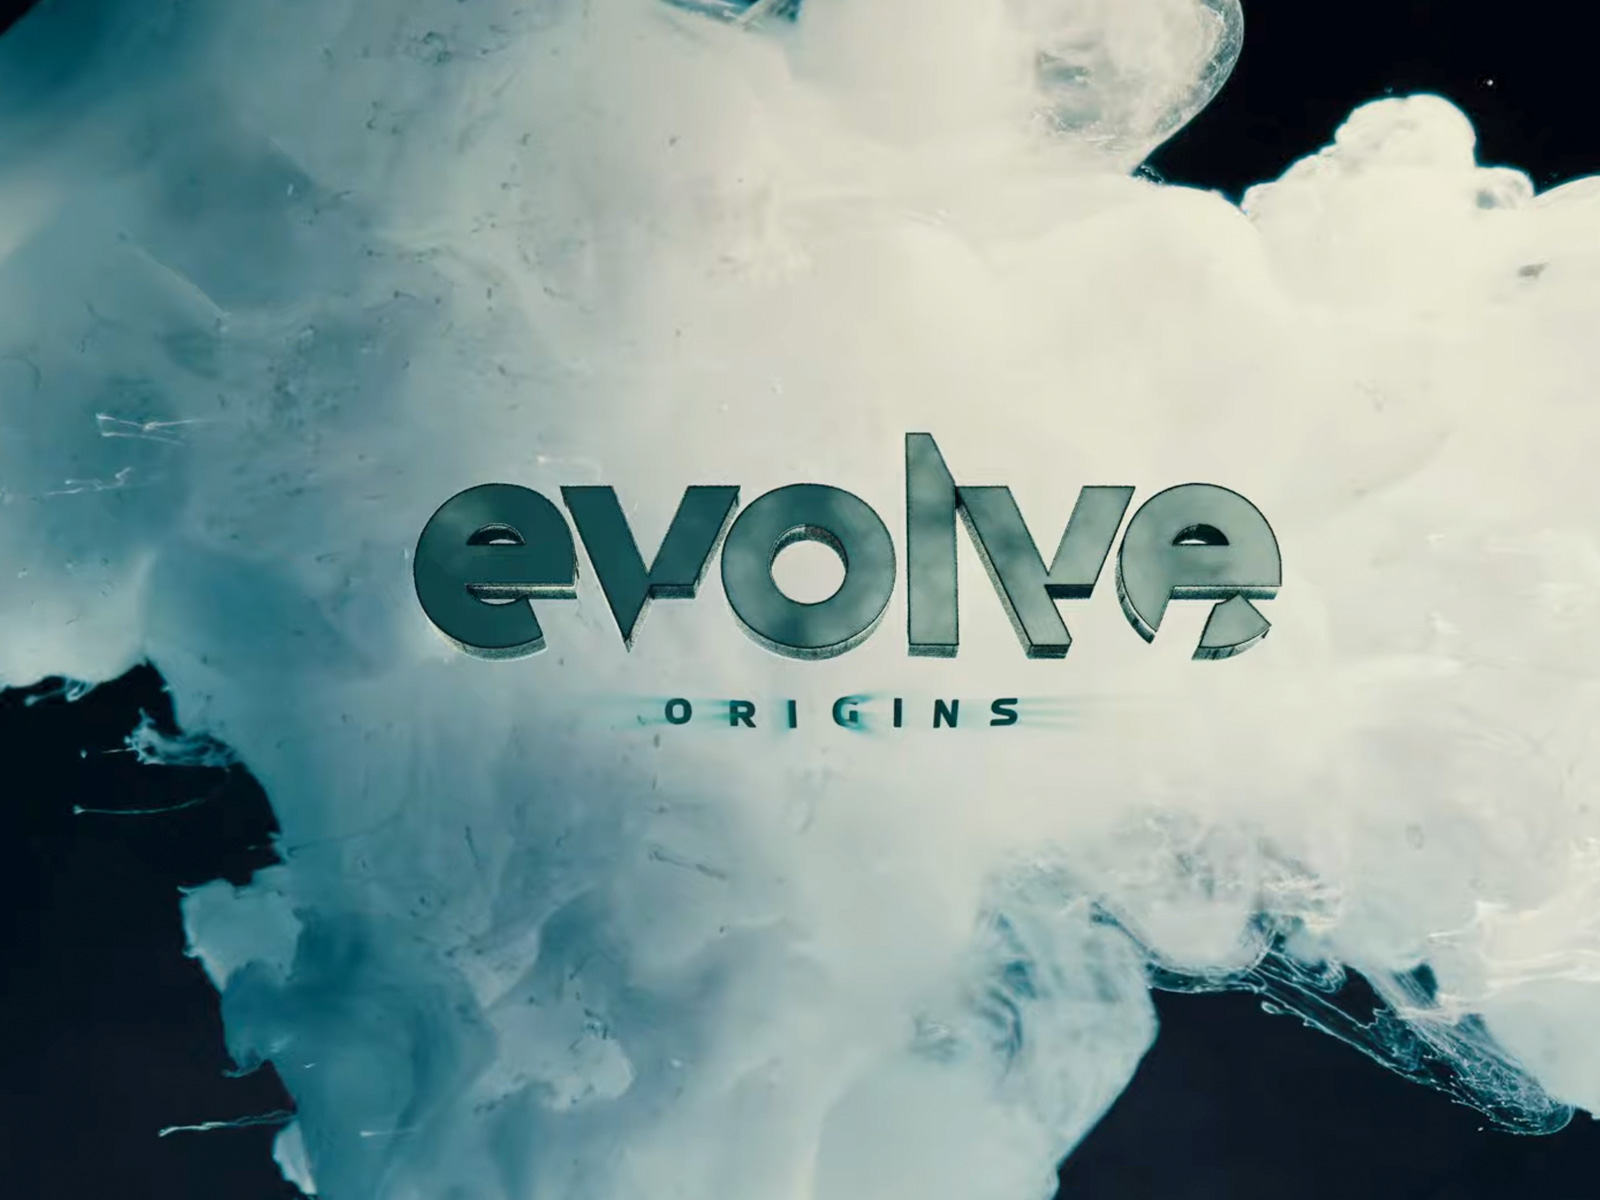 evolve-origins-phase-1-lineup-2019-oz-edm-feature